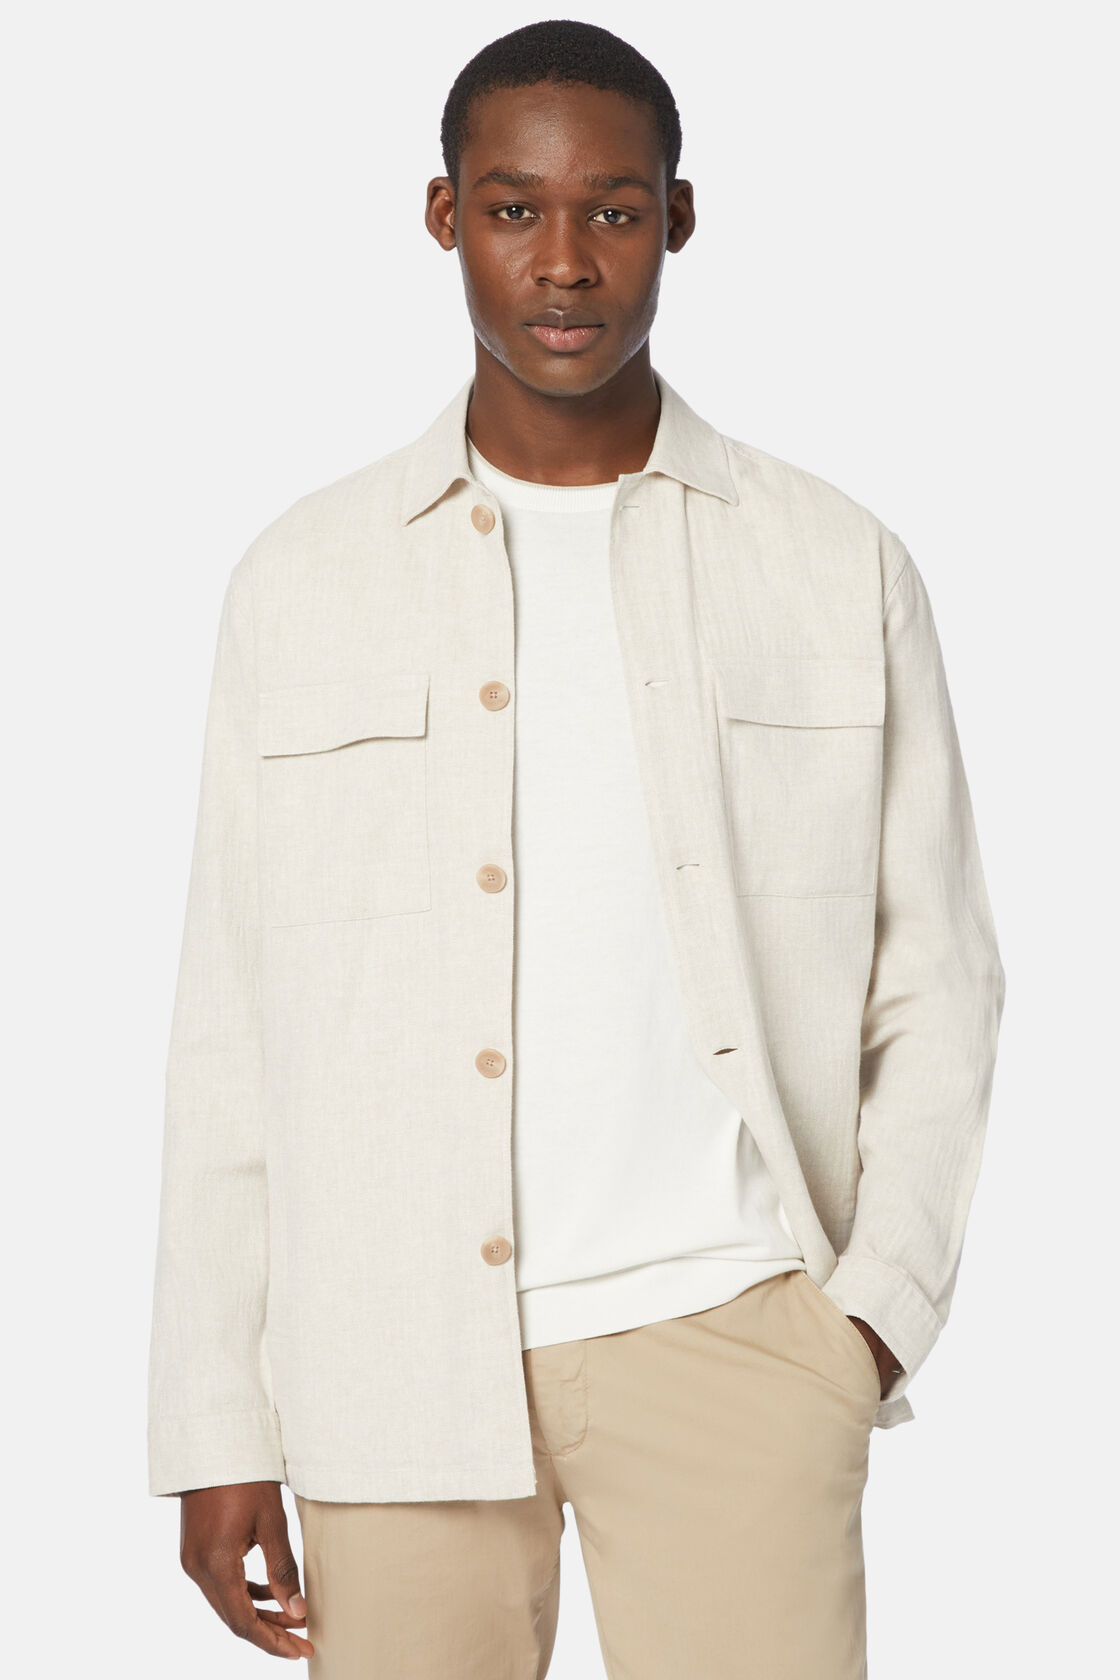 Cotton and Linen Link Shirt Jacket, Beige, hi-res